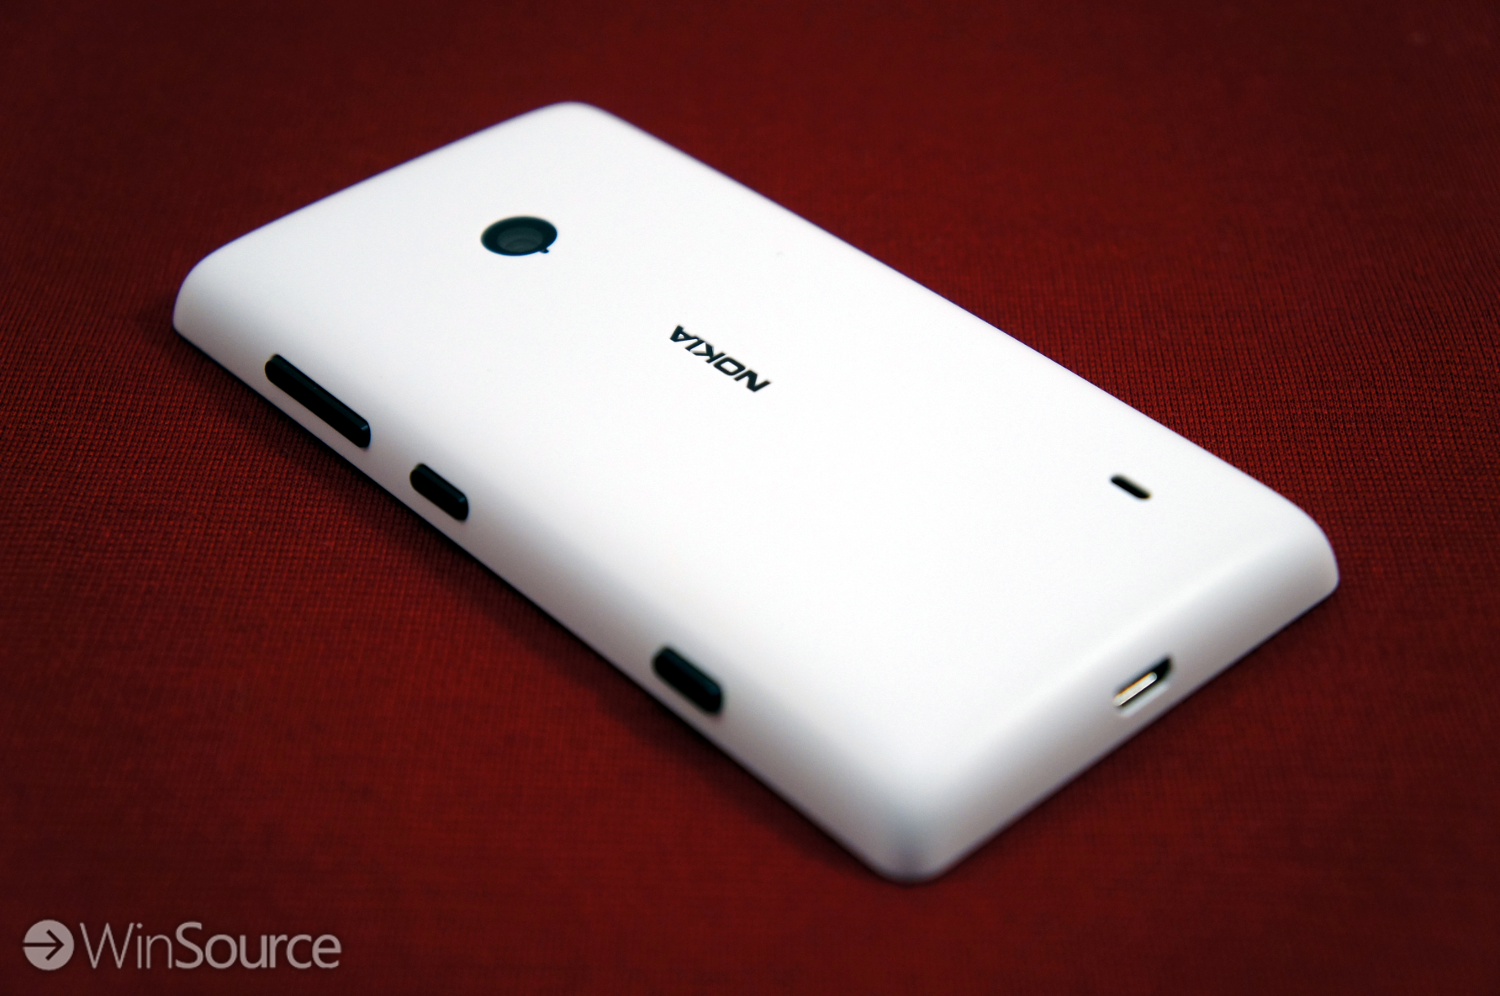  Lumia 521 White Gadget Photos 12364 Wallpaper WallpapersTubecom